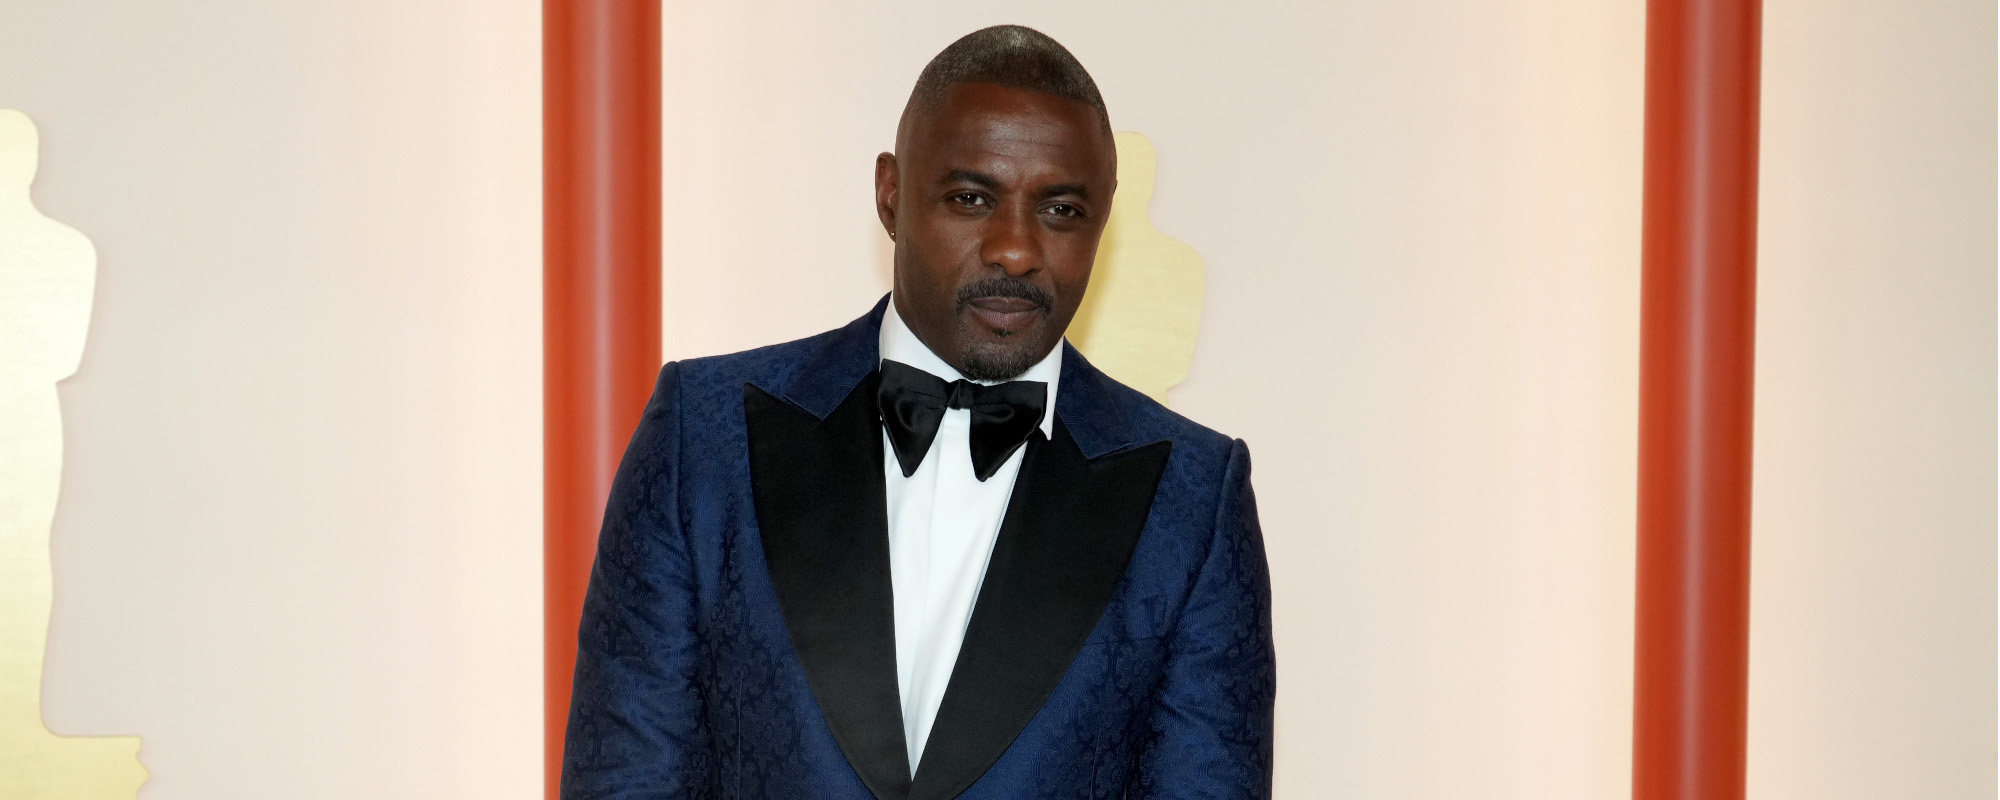 Idris Elba Lyrics, Songs, and Albums